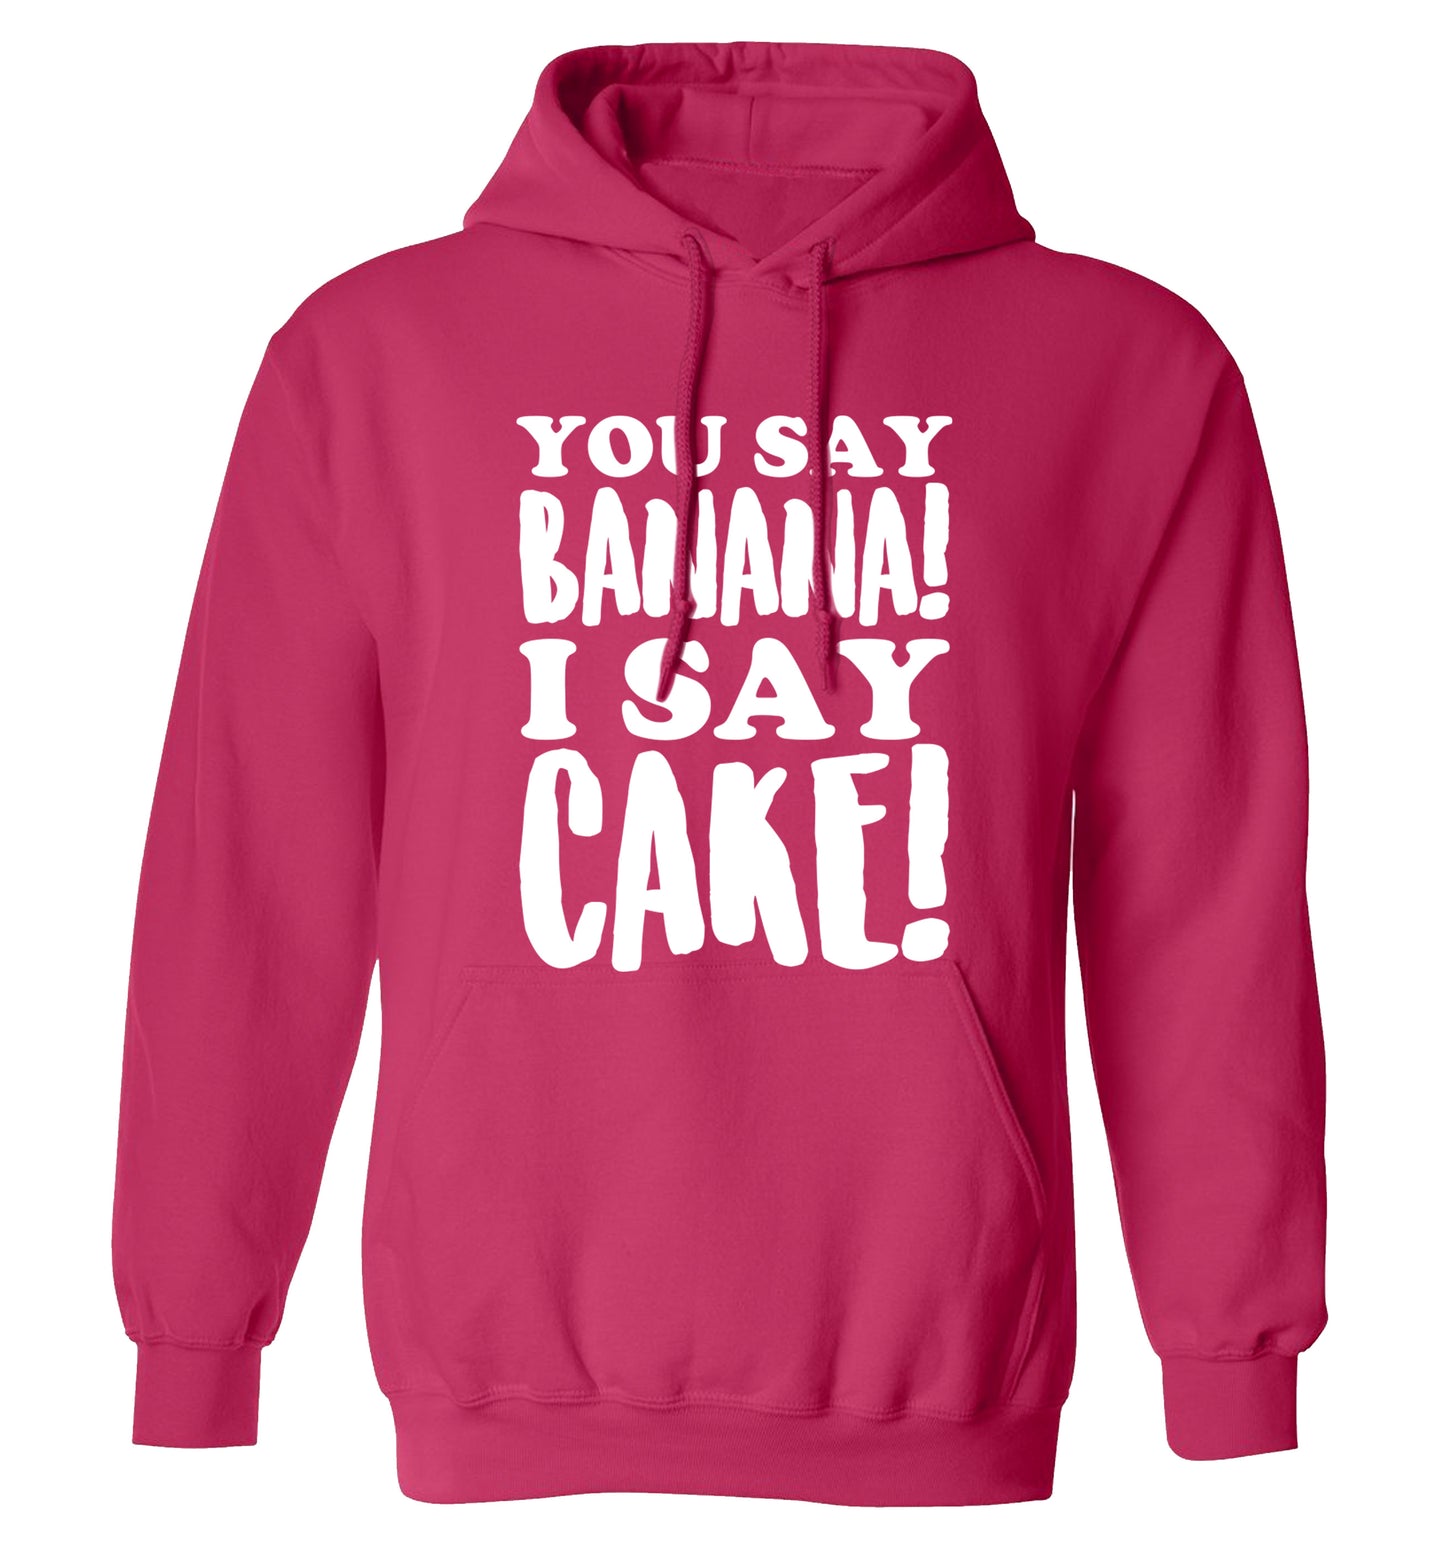 You say banana I say cake! adults unisex pink hoodie 2XL